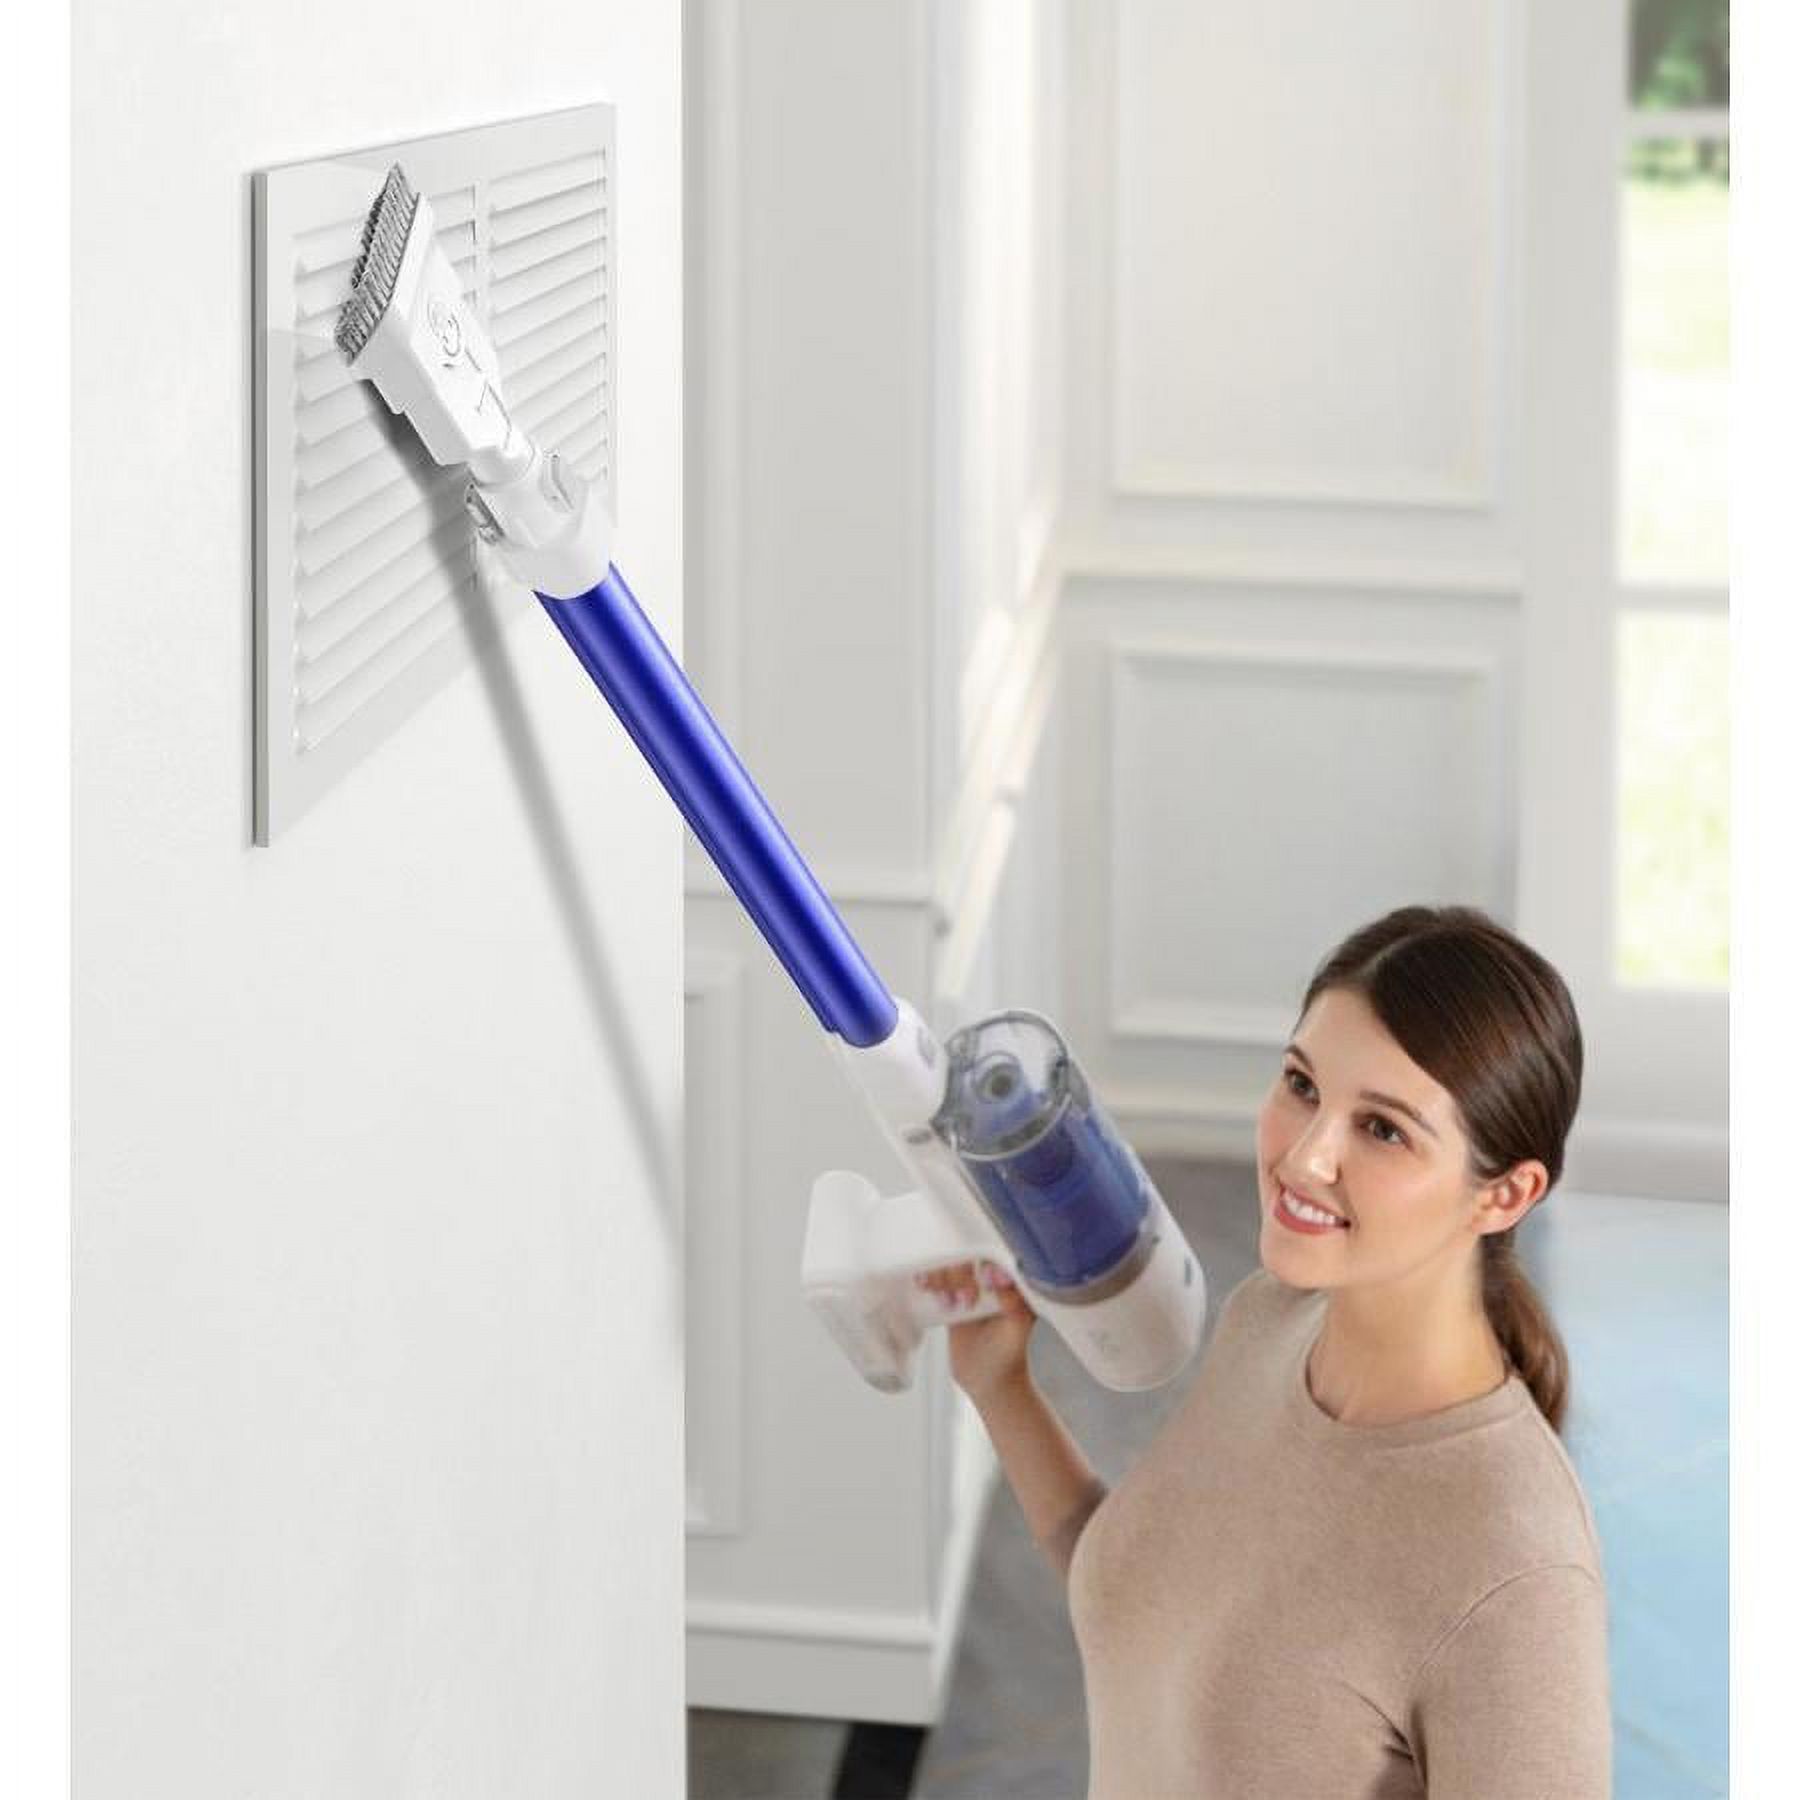 Anker eufy HomeVac S11 Reach, Handstick Vaccum Cleaner - image 5 of 6